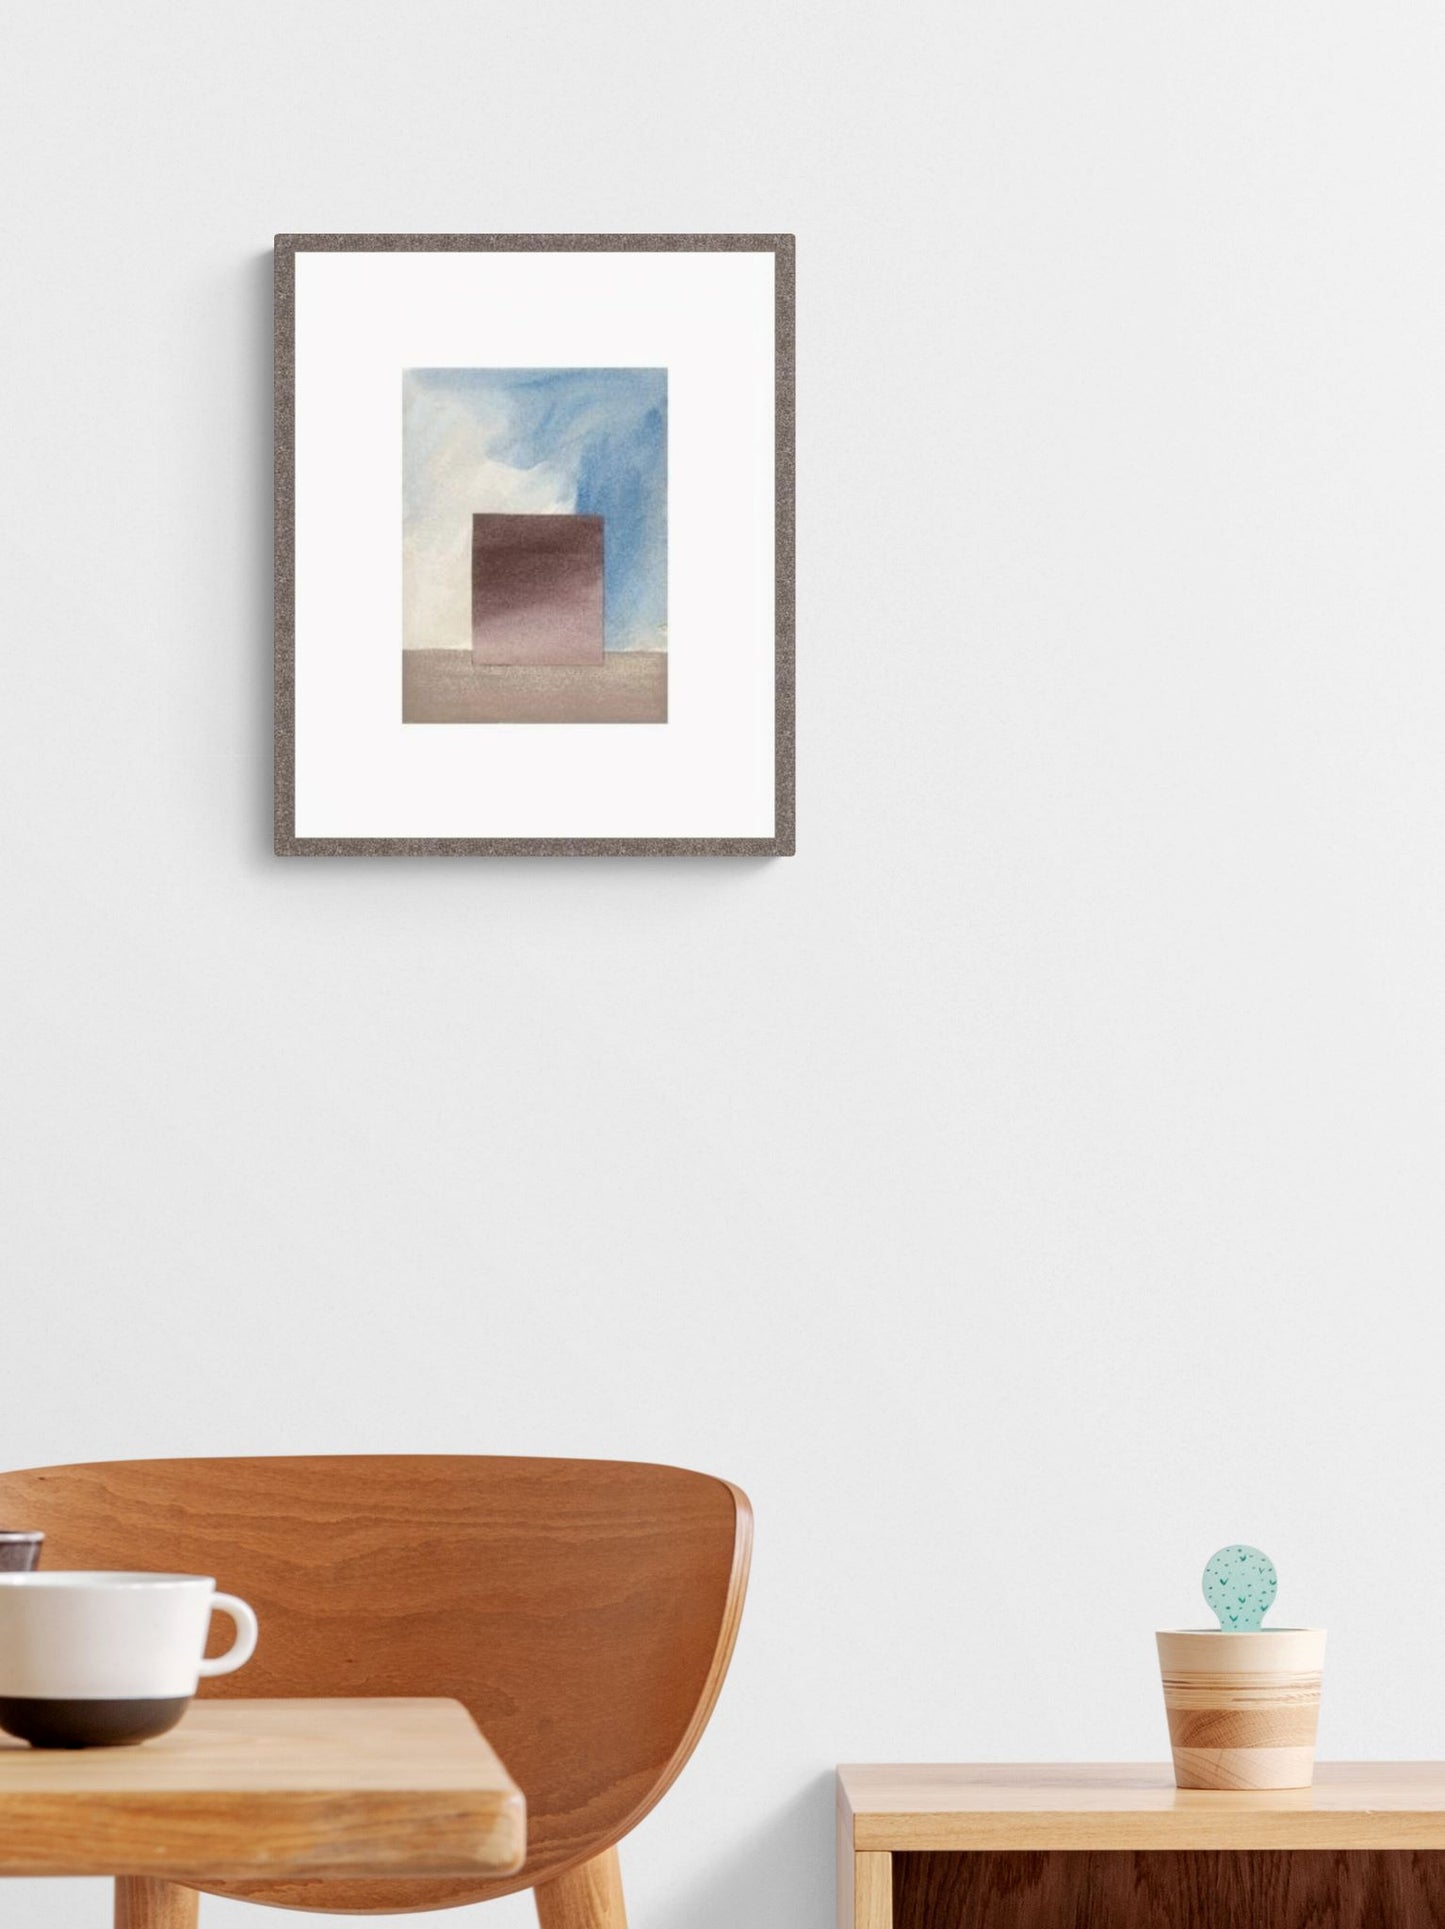 Standing Form in Landscape Framed Limited Edition Giclée Print